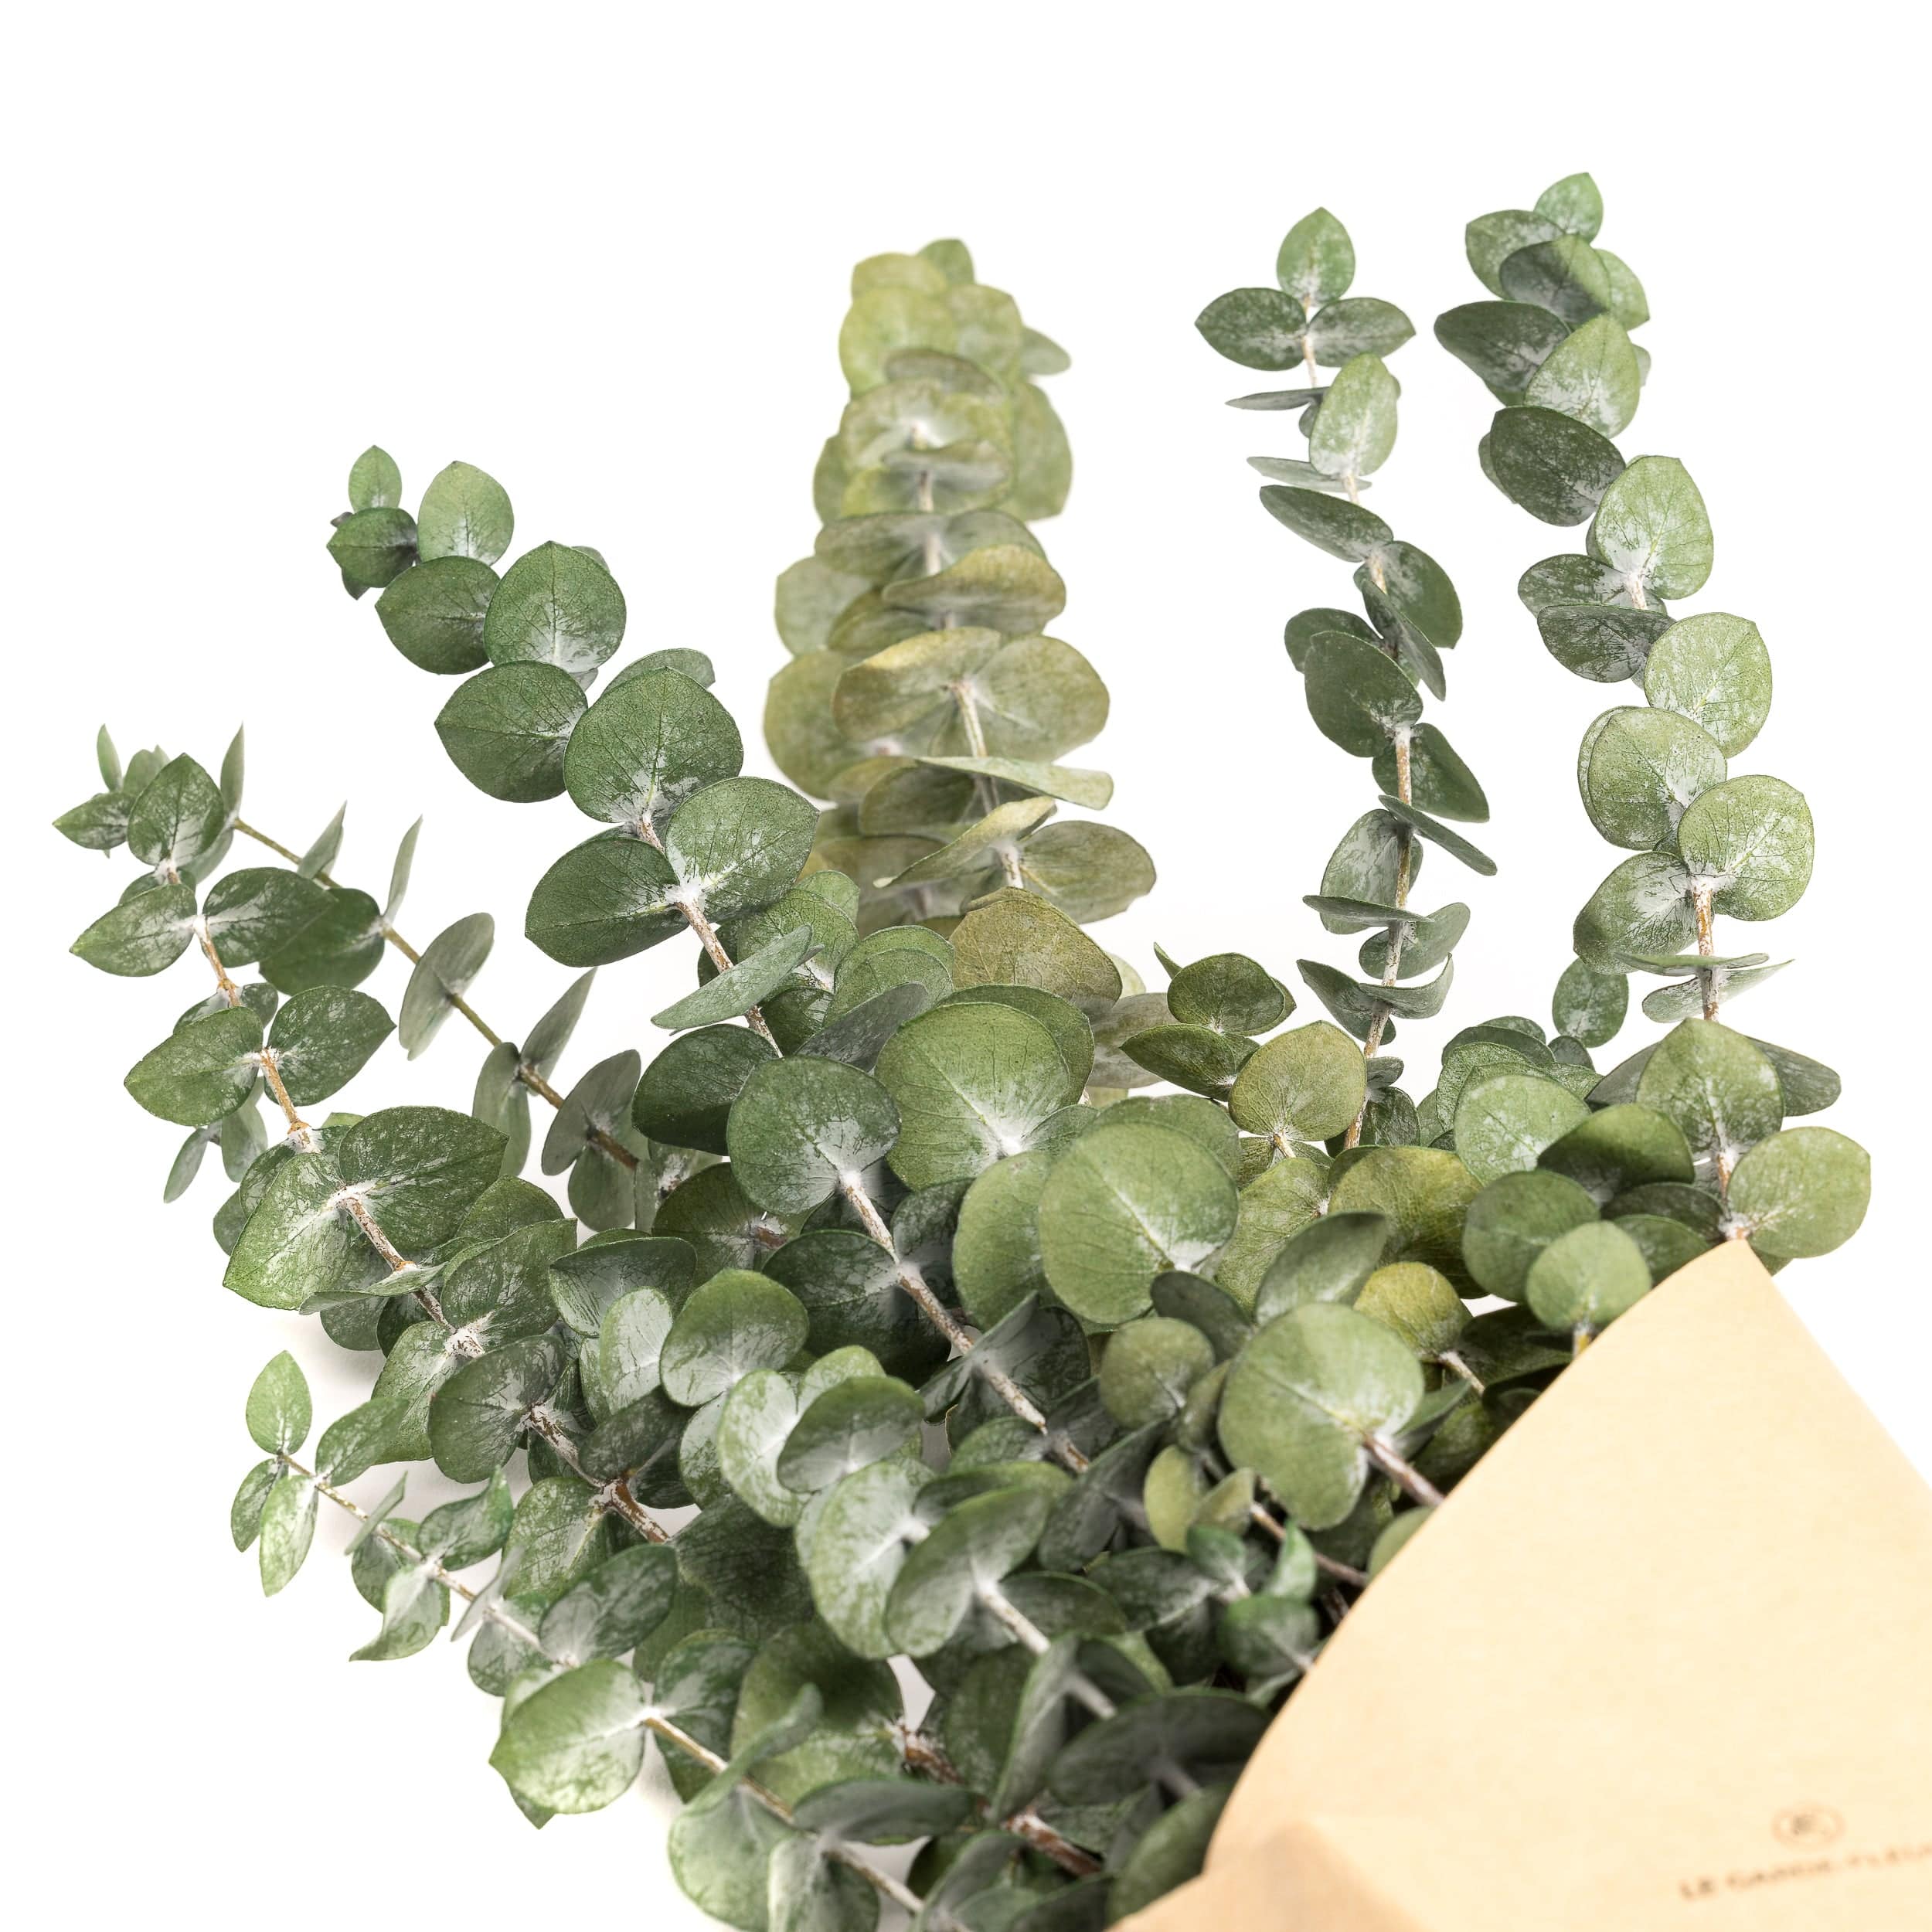 Bouquet d'eucalyptus séché - SOJA&CO. ™